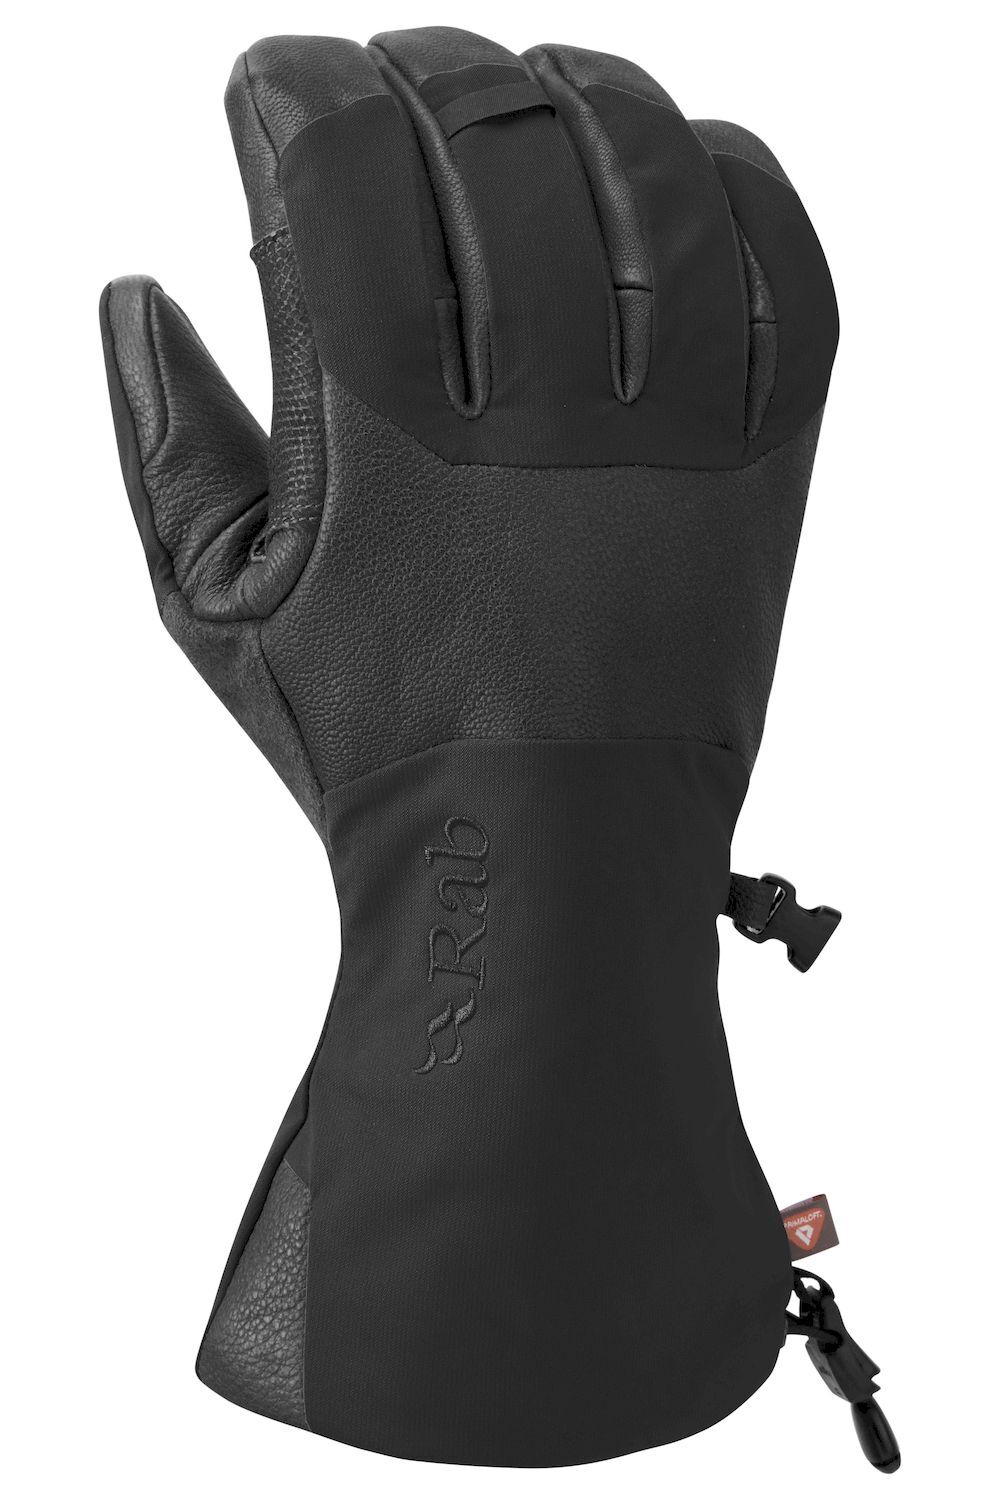 Rab Guide 2 GTX Gloves - Handschuhe